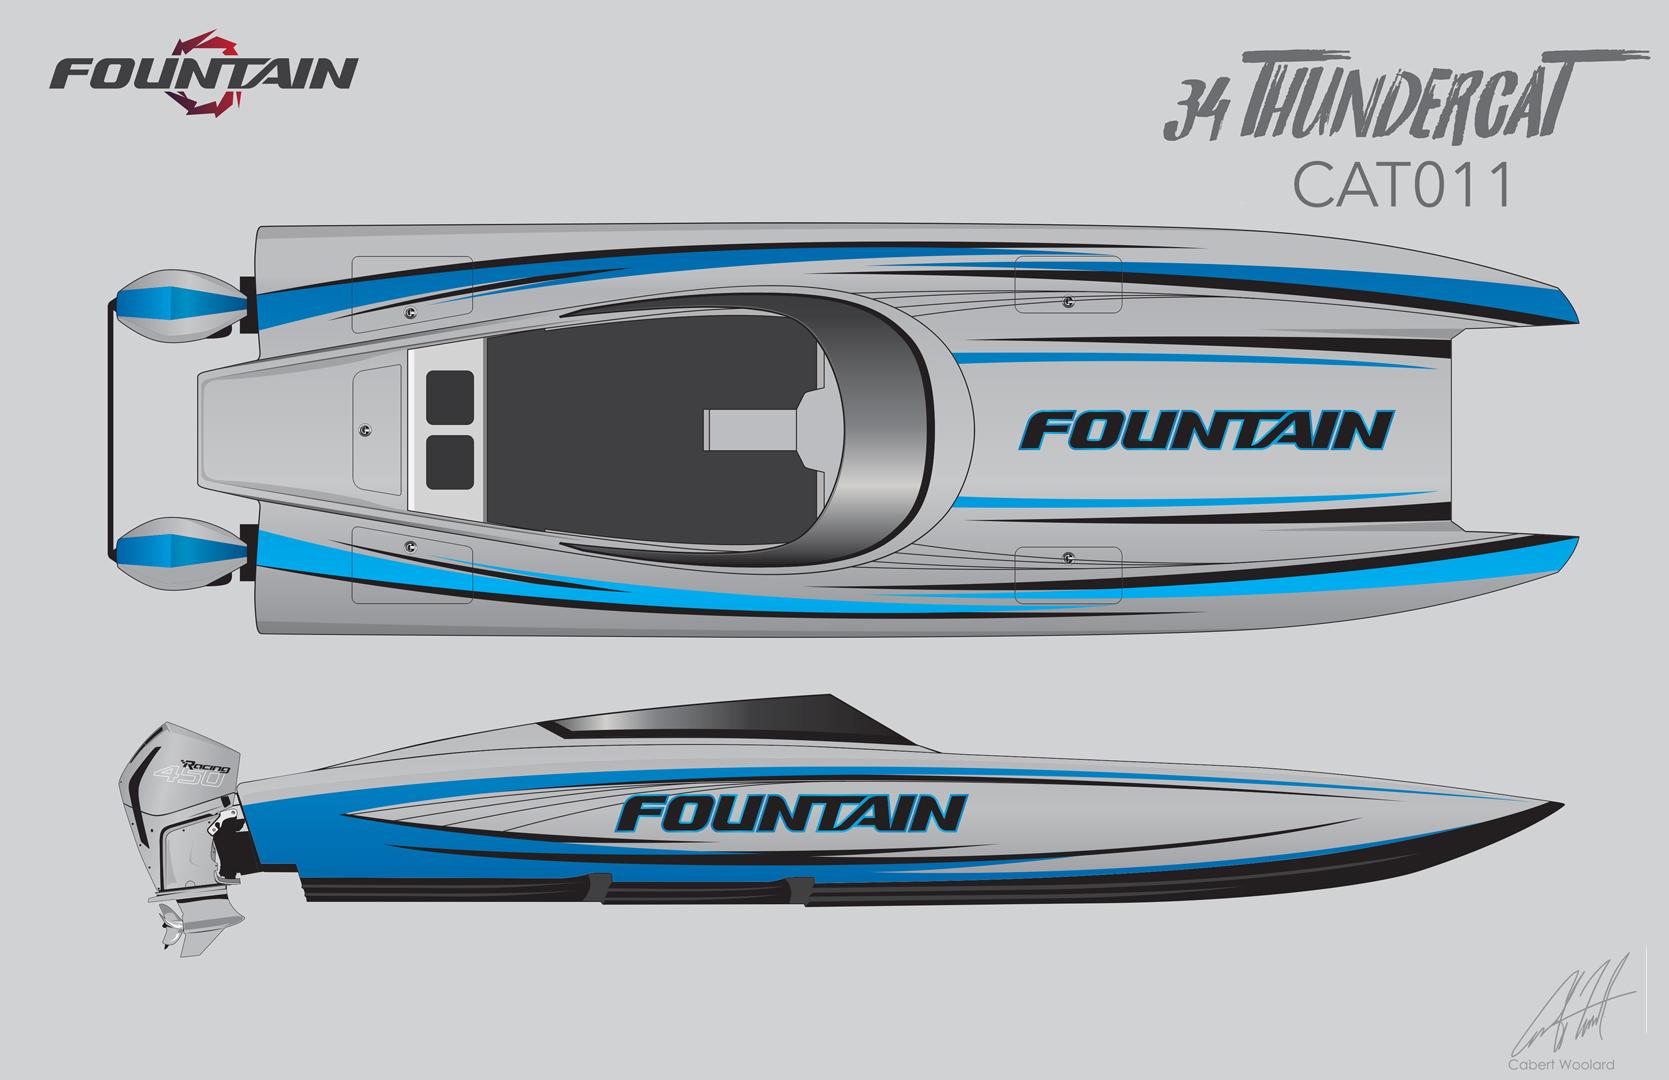 2024 Fountain 34 Thundercat High Performance for sale YachtWorld